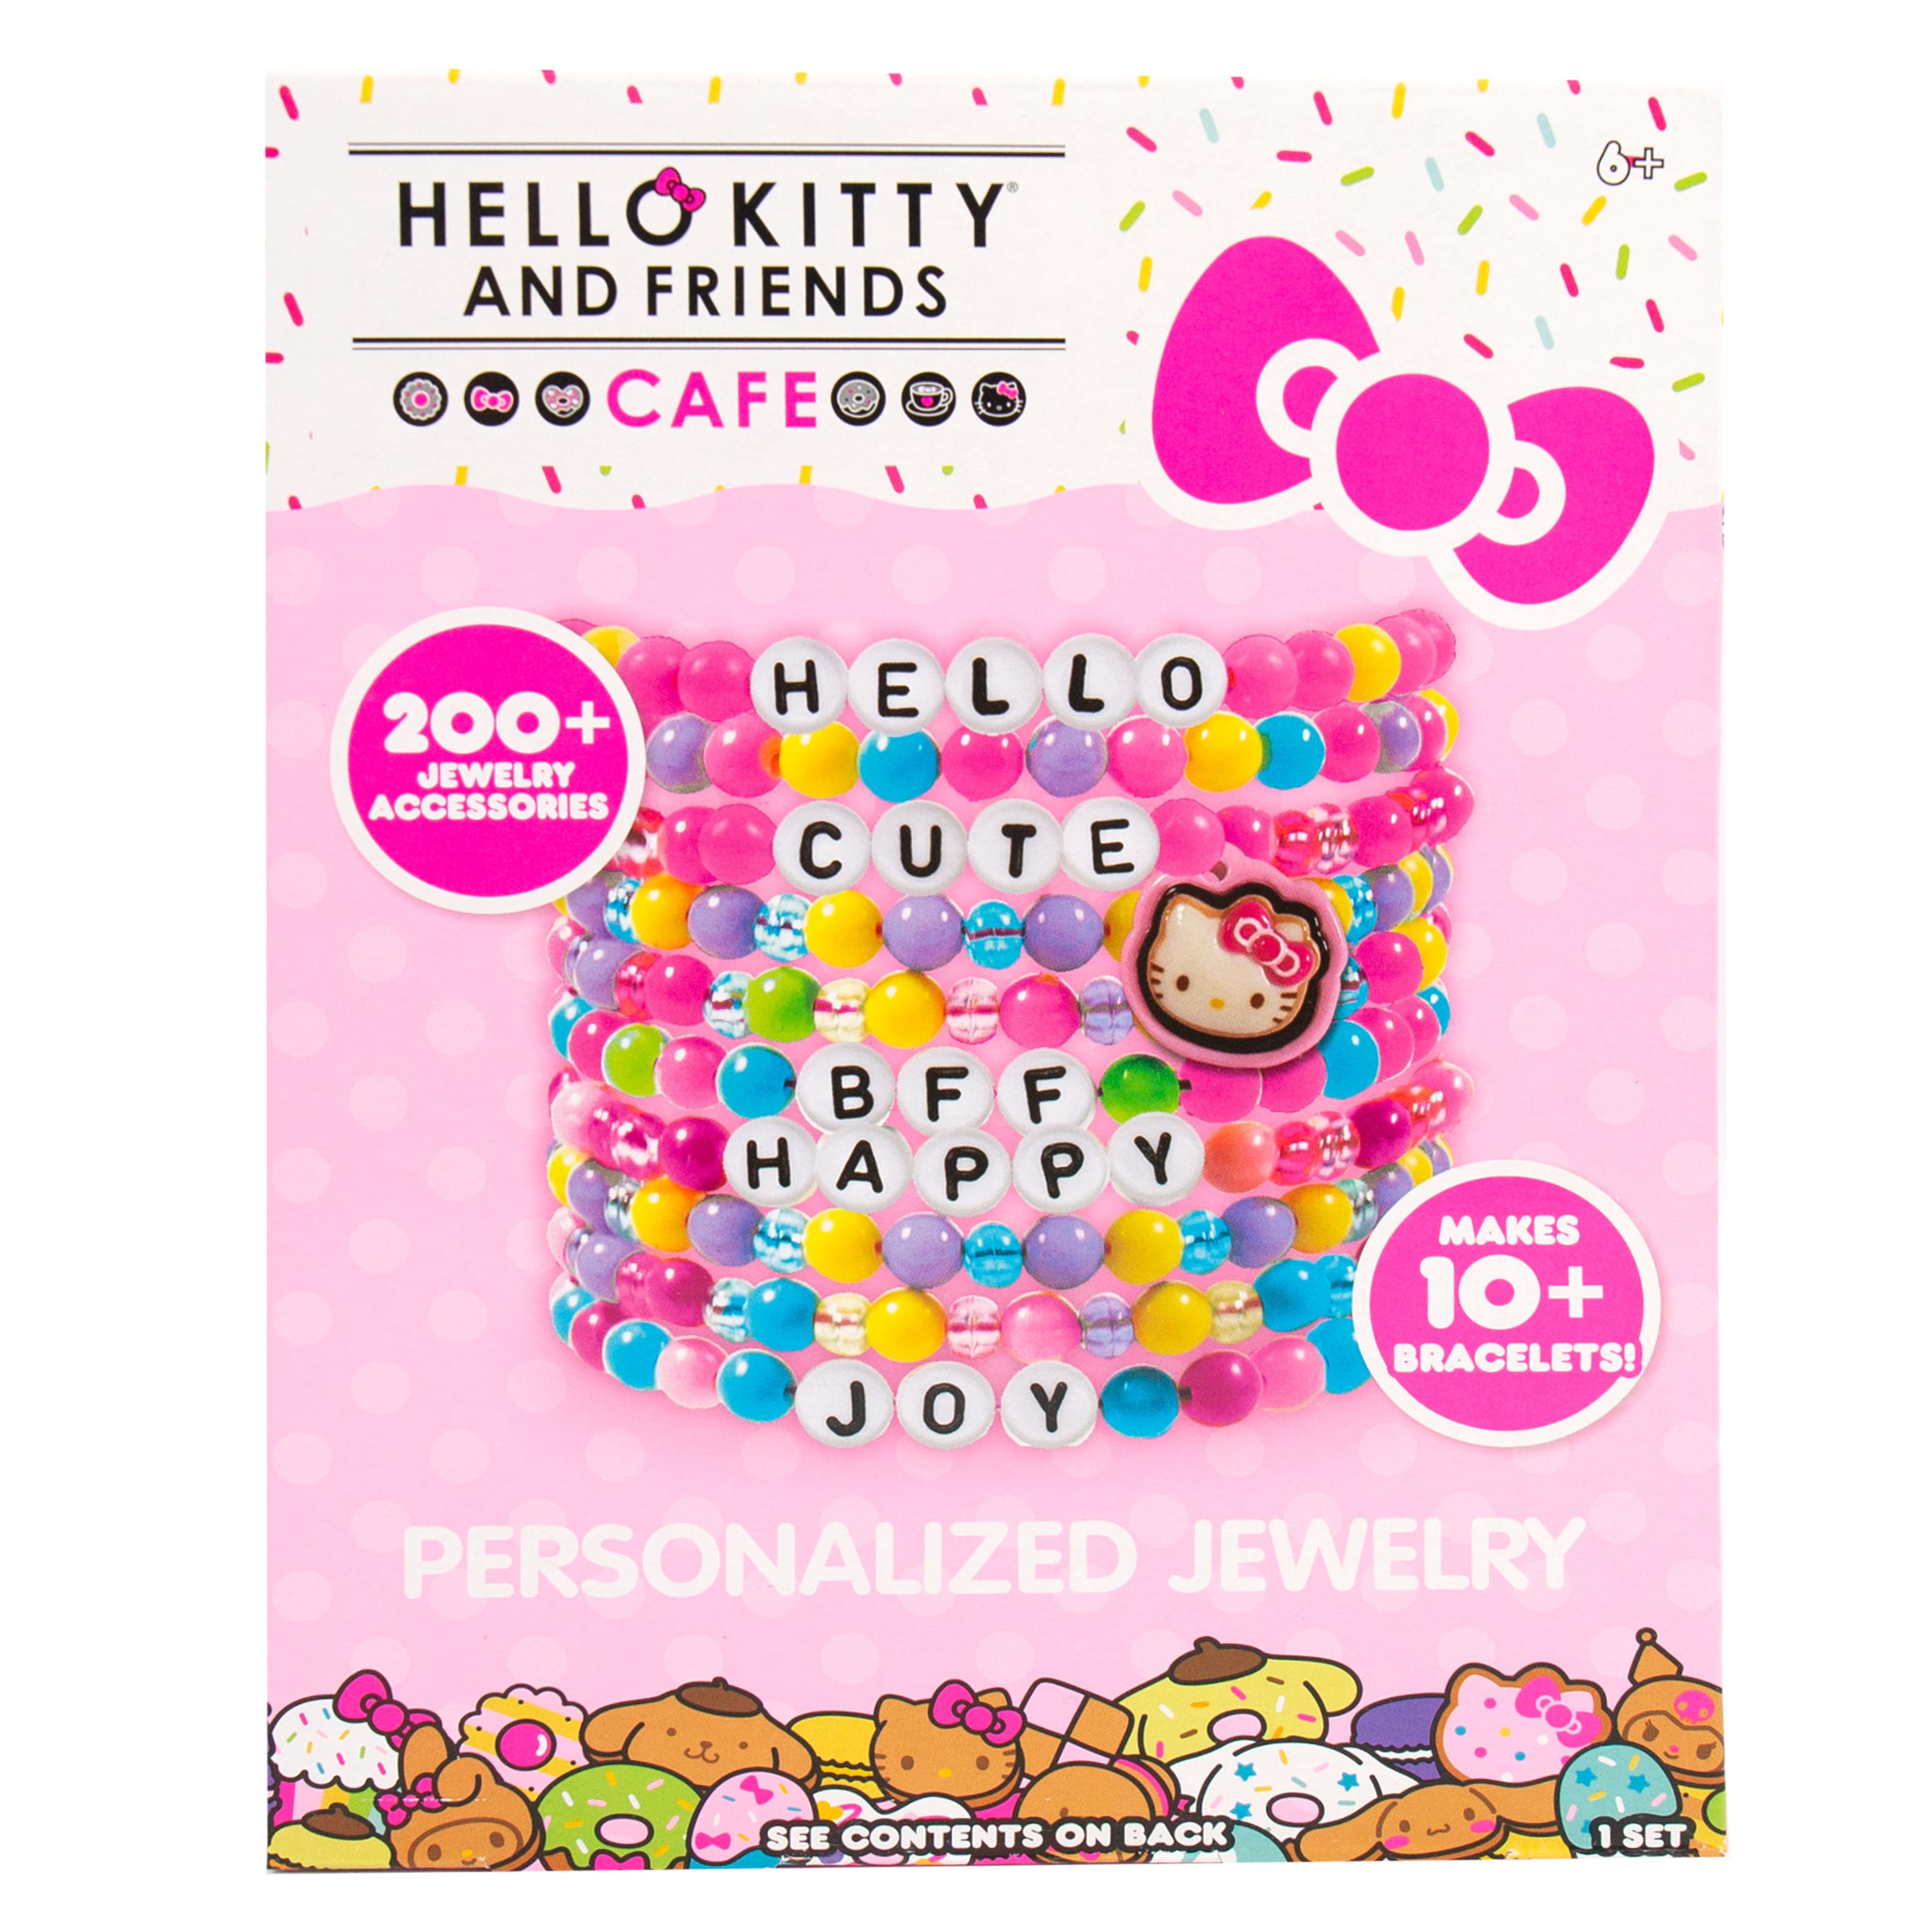 Hello Kitty Baking Supplies and Craft Kits